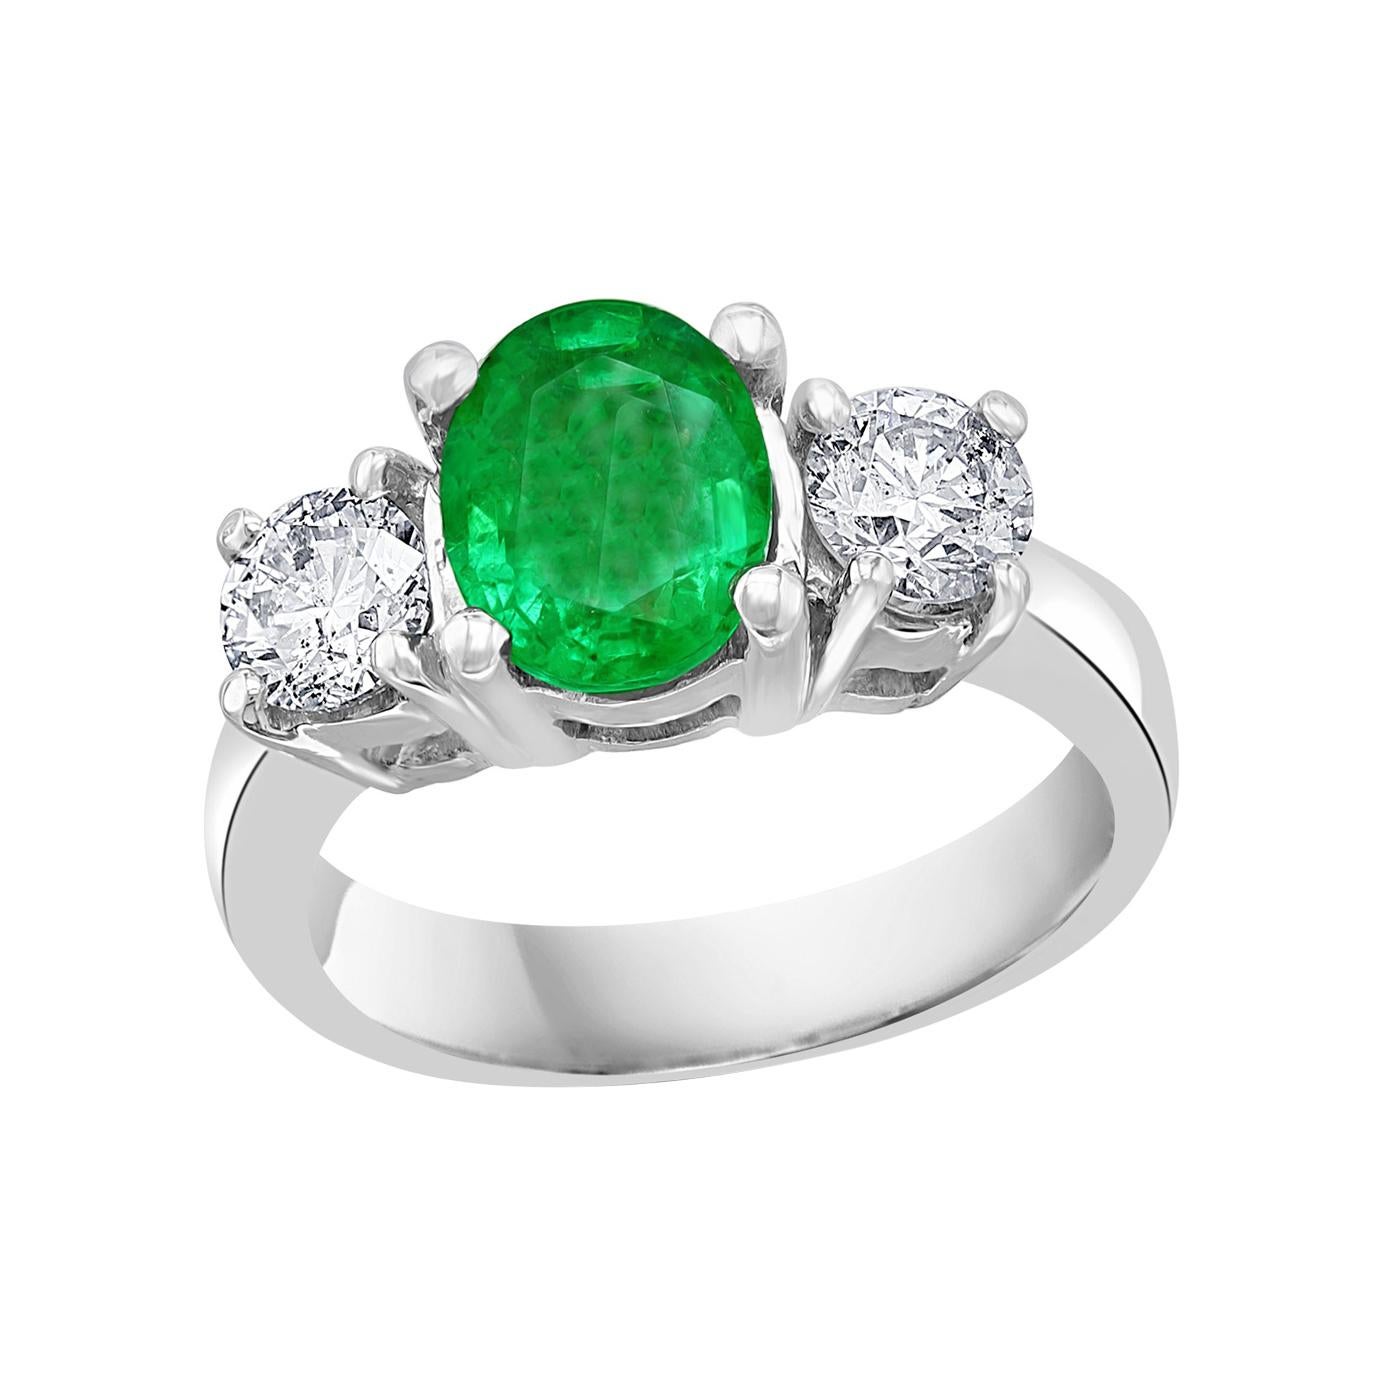 1.8 Carat Oval Cut Emerald & 0.90 Ct Diamond Ring in Platinum